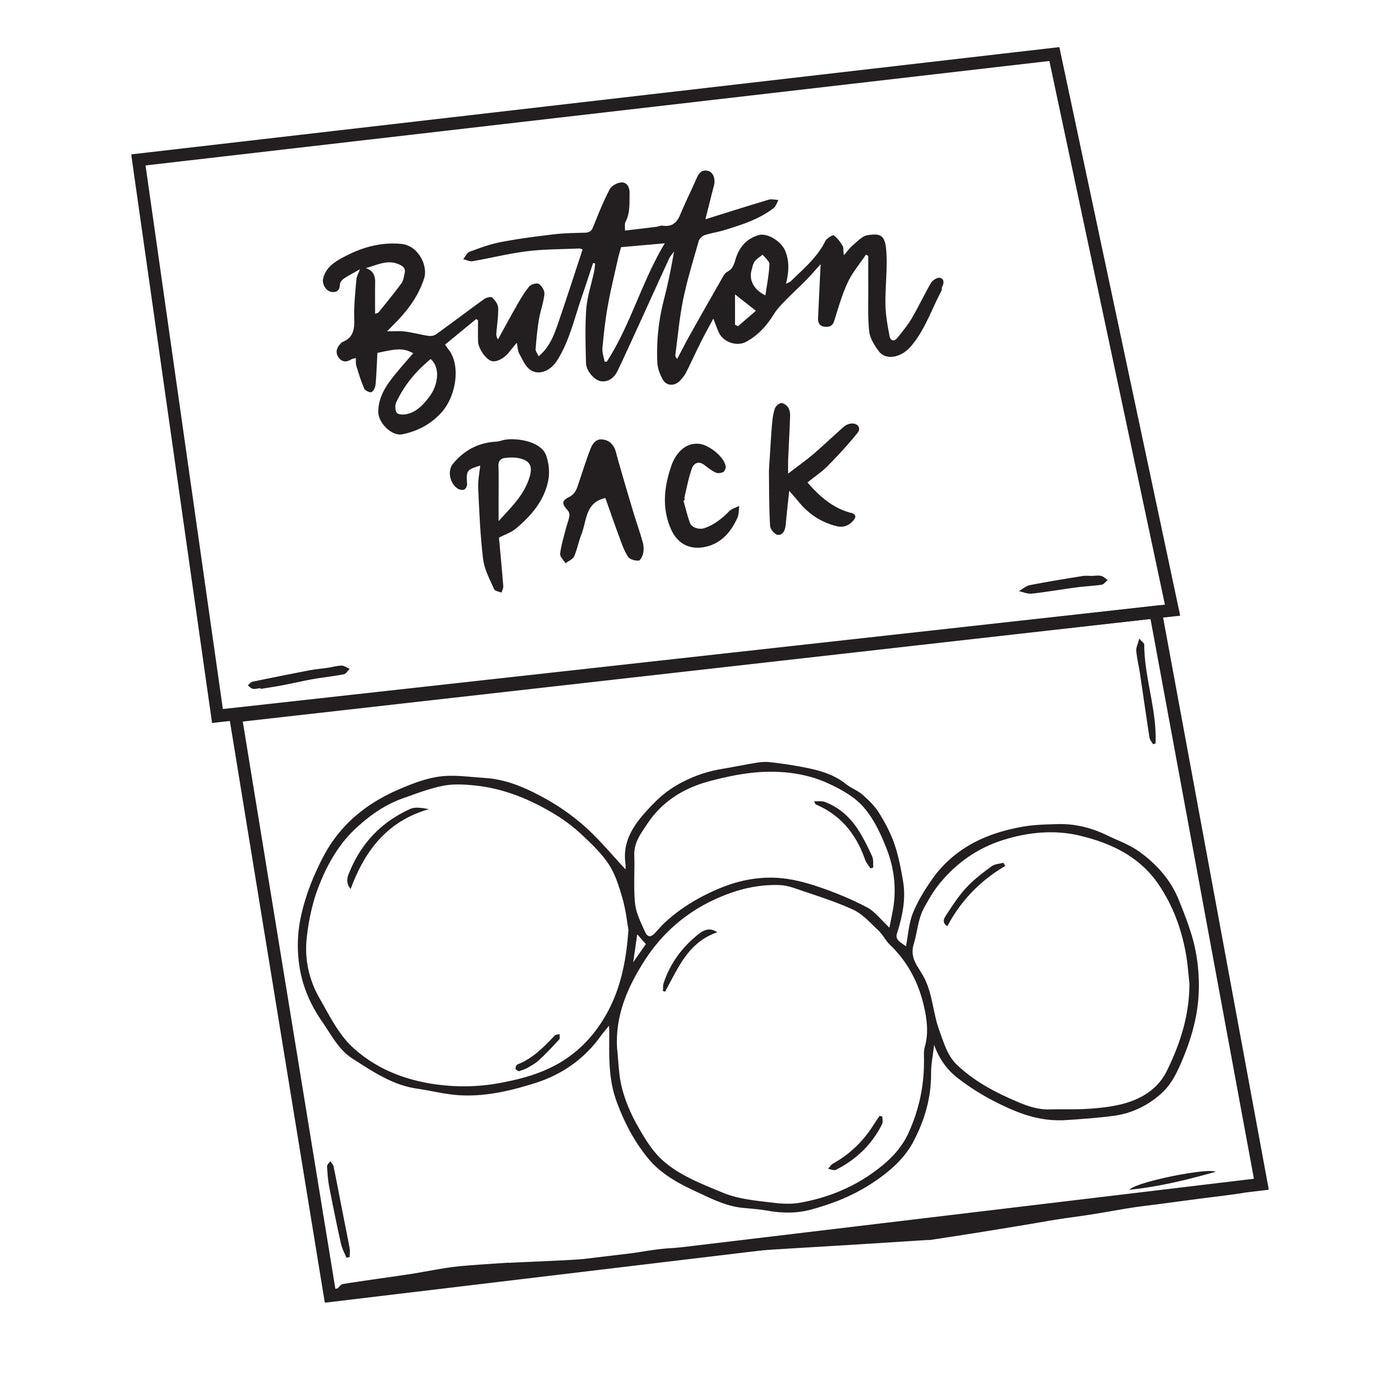 Button Set